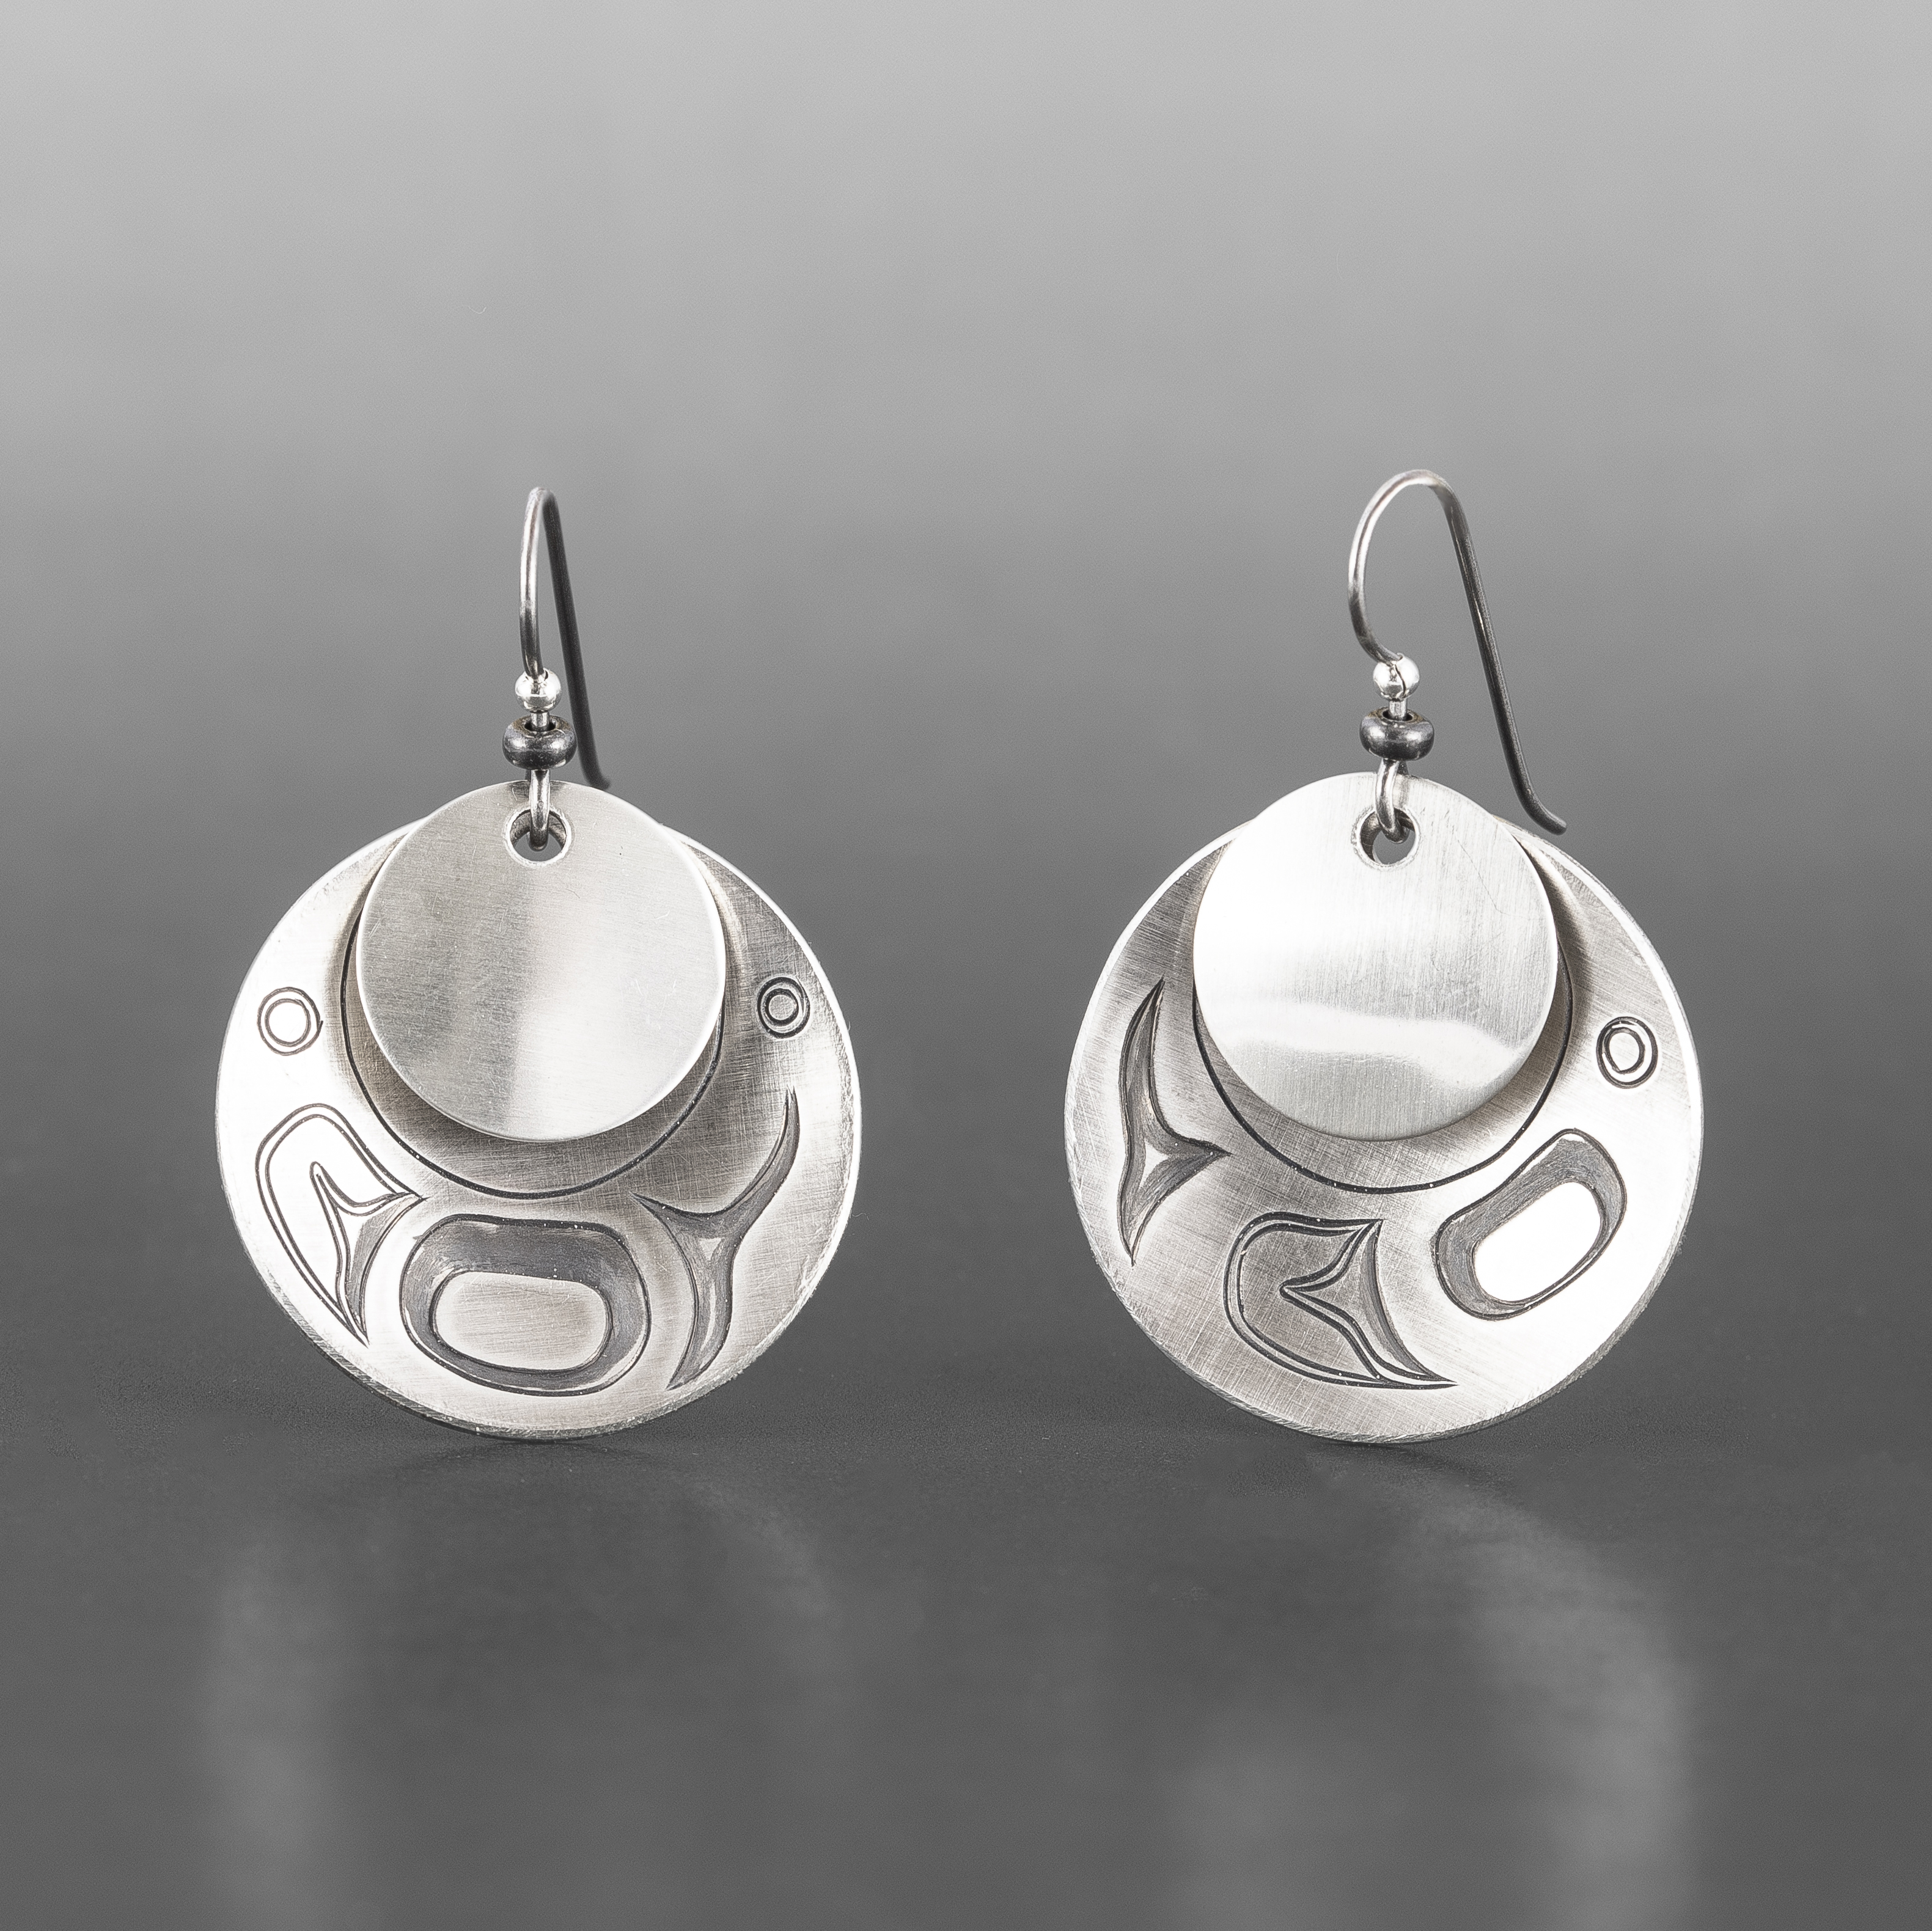 Moonshadow Earrings
Jennifer Younger
Tlingit
Silver
1 ¼” dia.
$200